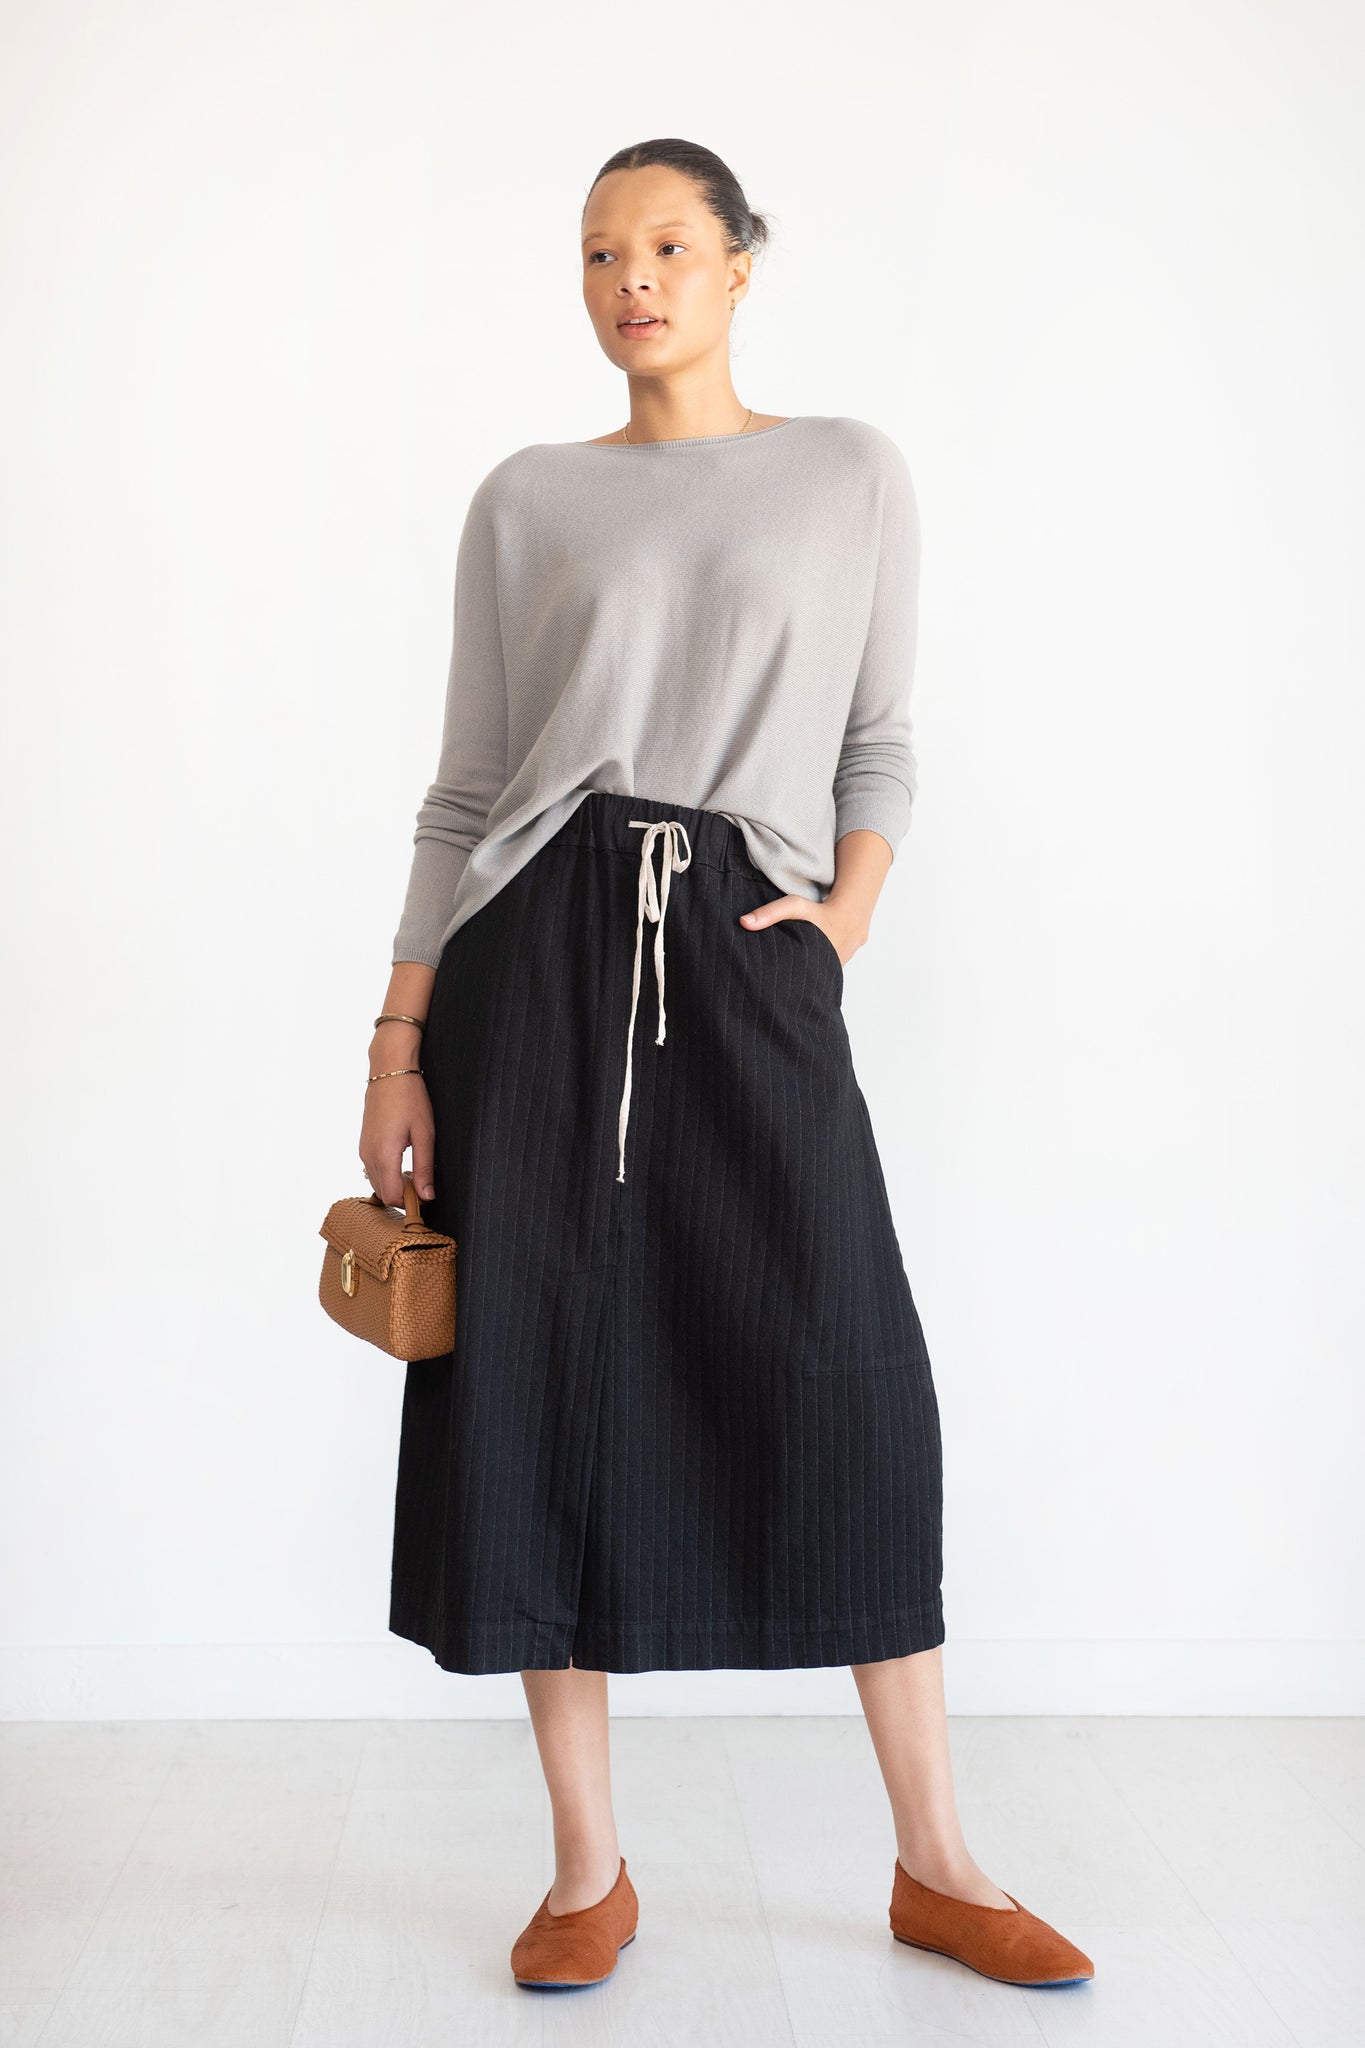 APUNTOB - Long Sleeve Knitwear, Medium Grey